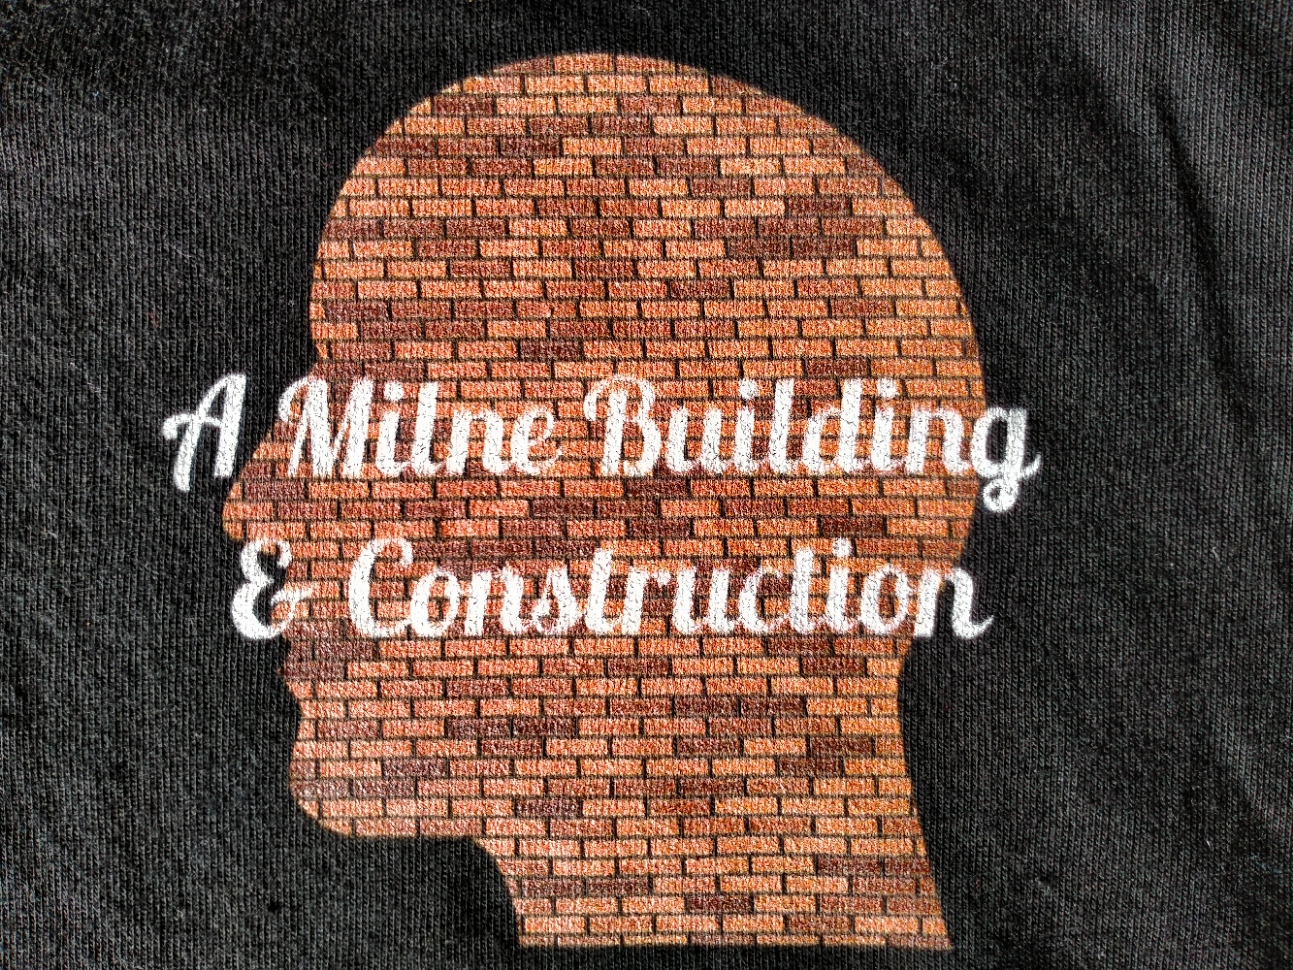 A Milne Building & Construction